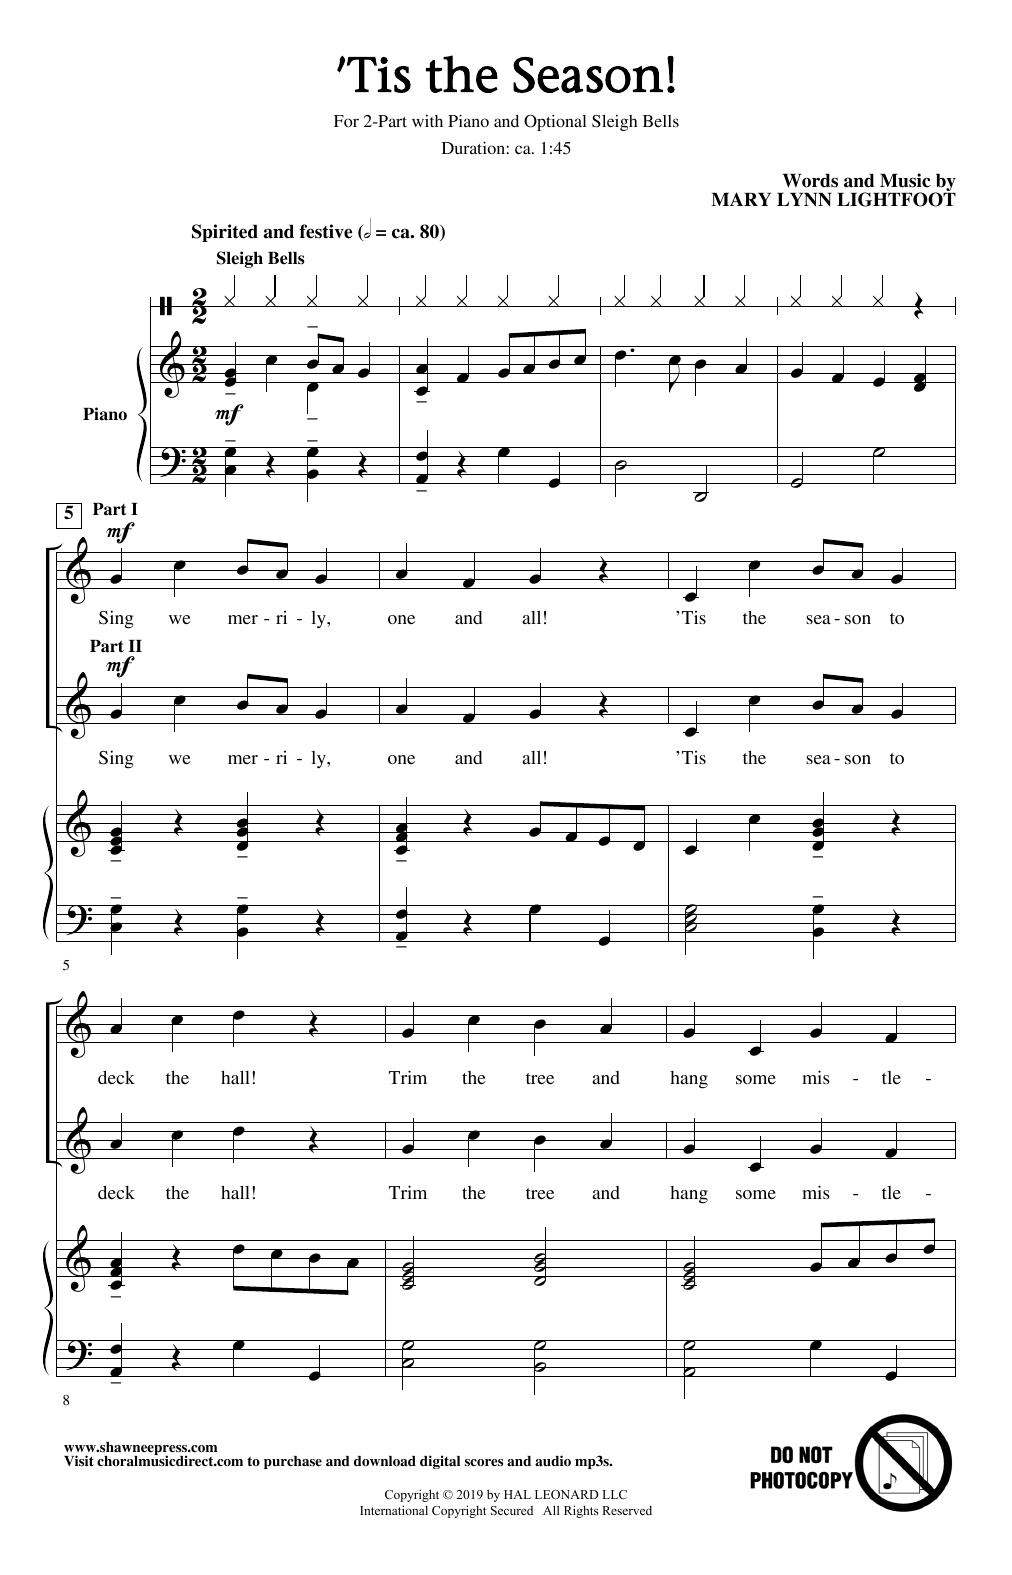 Mary Lynn Lightfoot 'Tis The Season! Sheet Music Notes & Chords for 2-Part Choir - Download or Print PDF